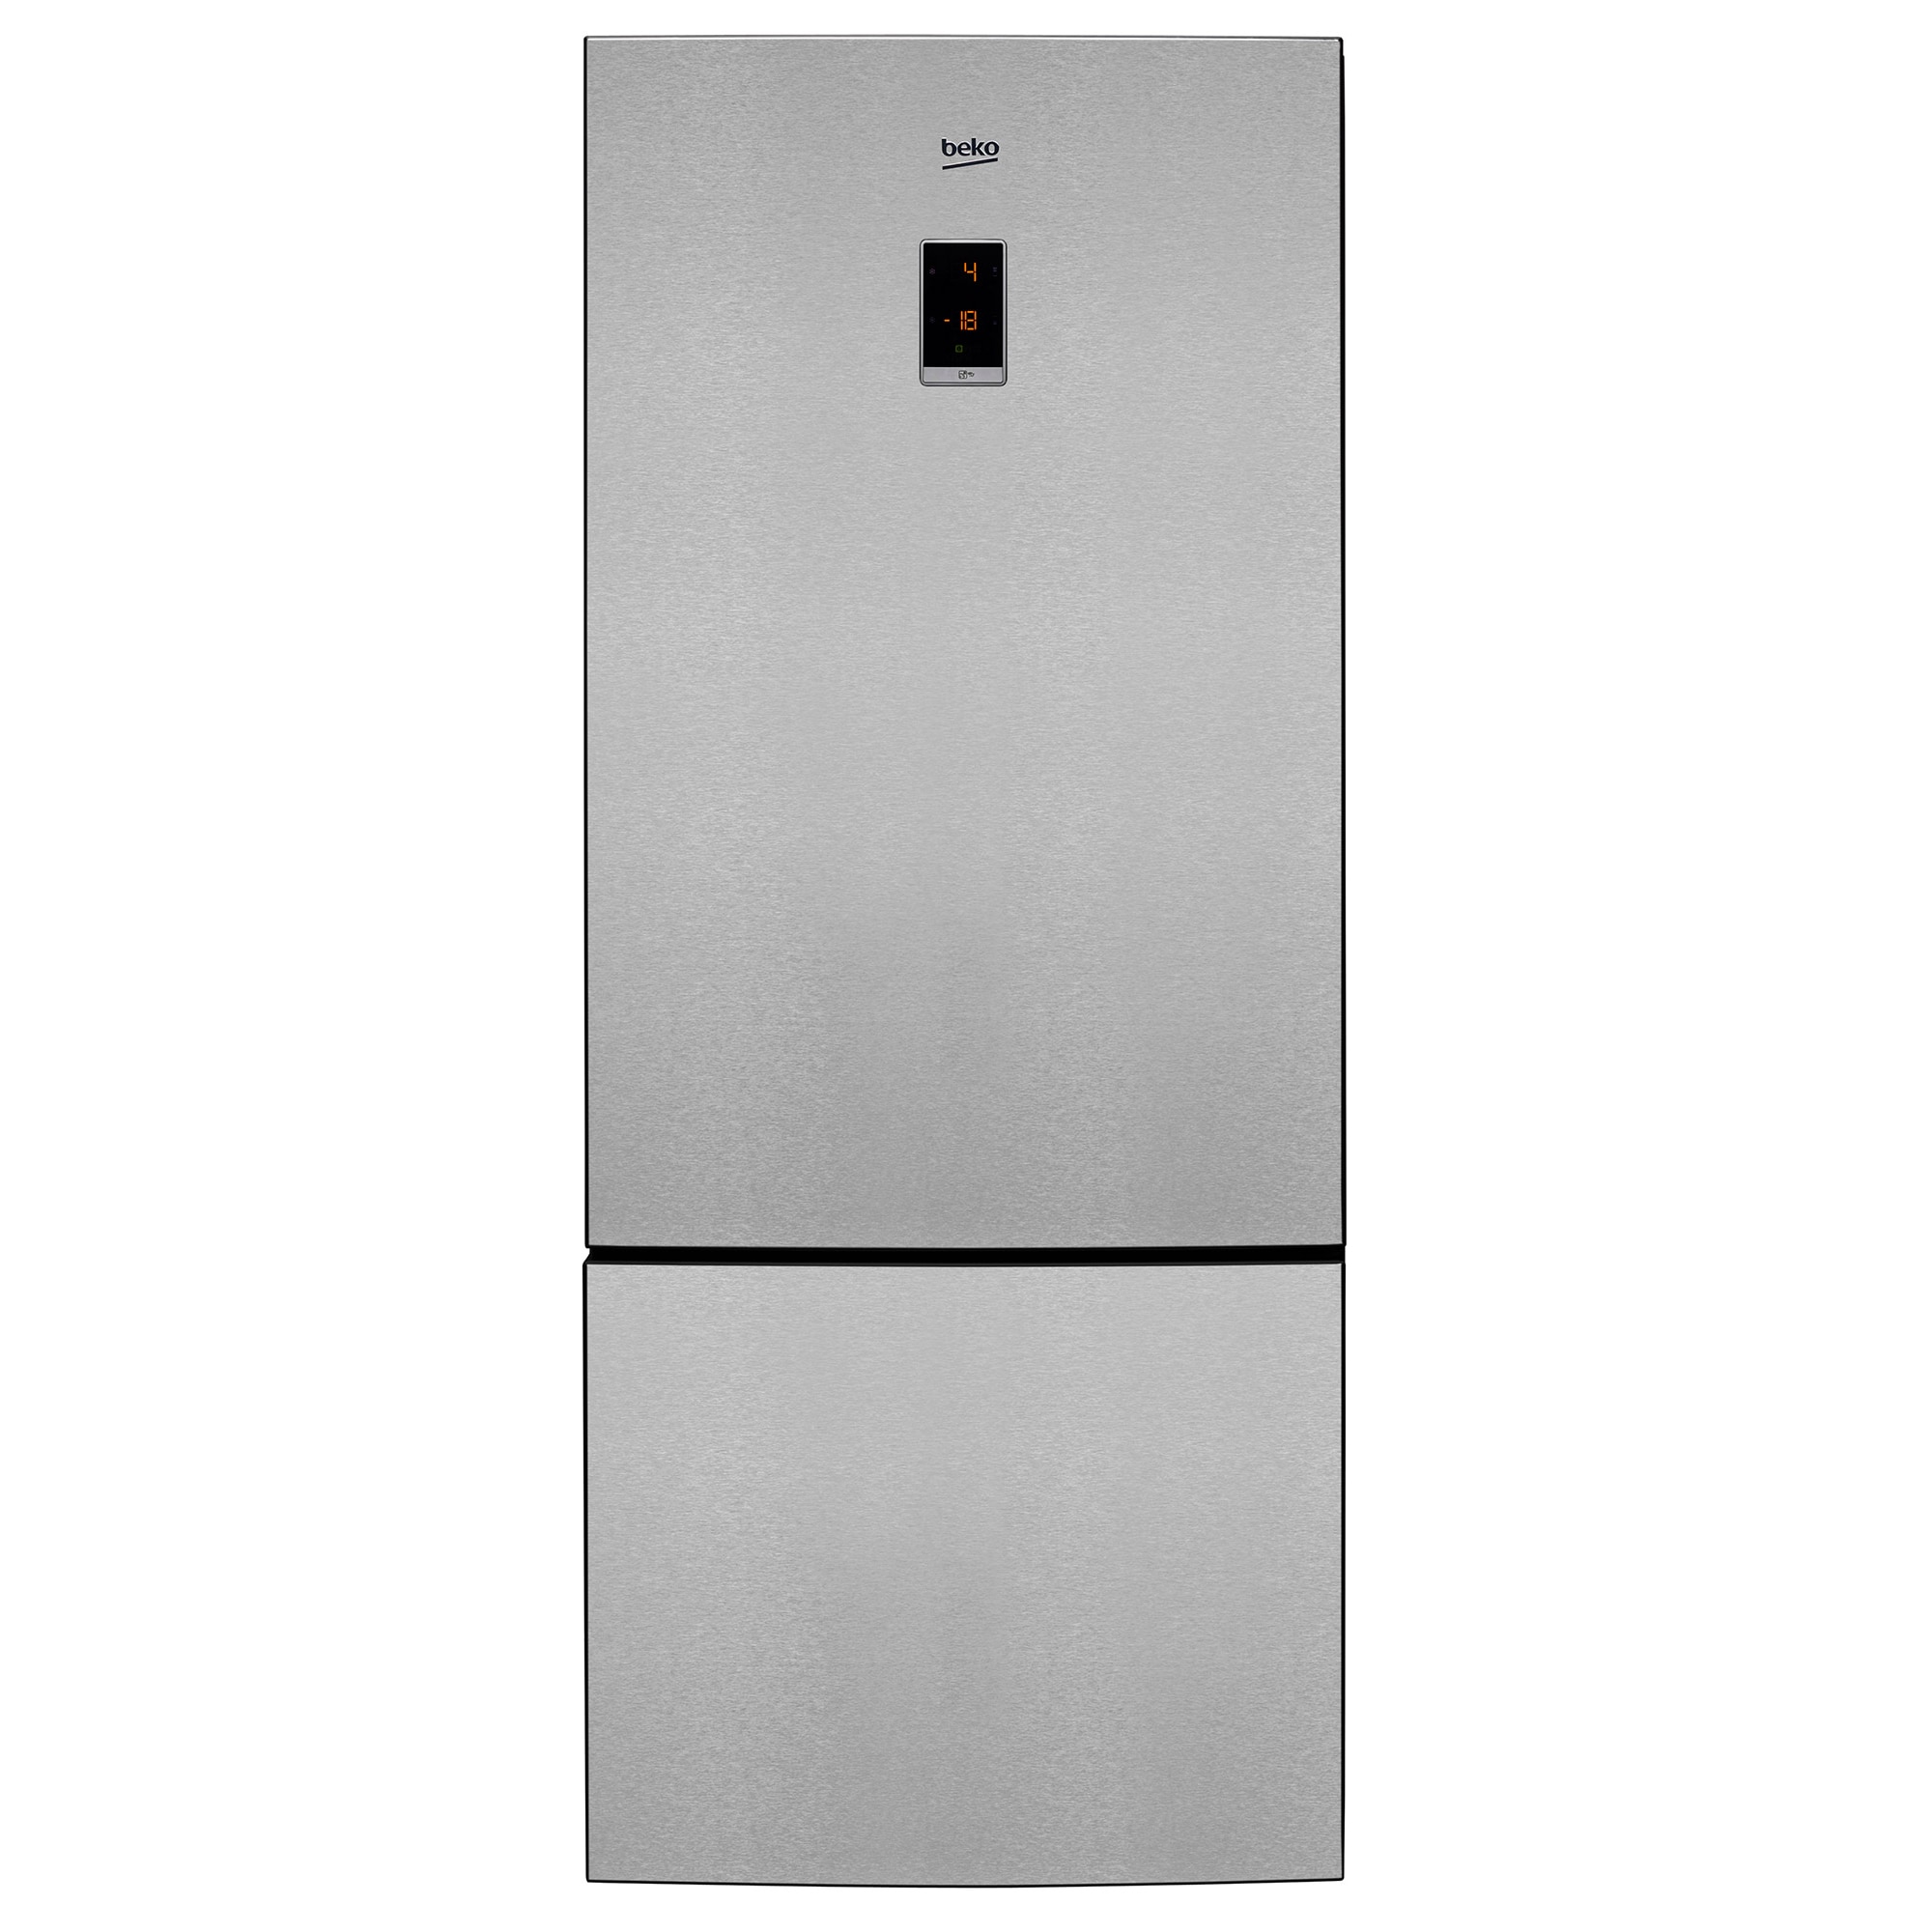 Хладилник Beko CN158230X с обем от 497 л.